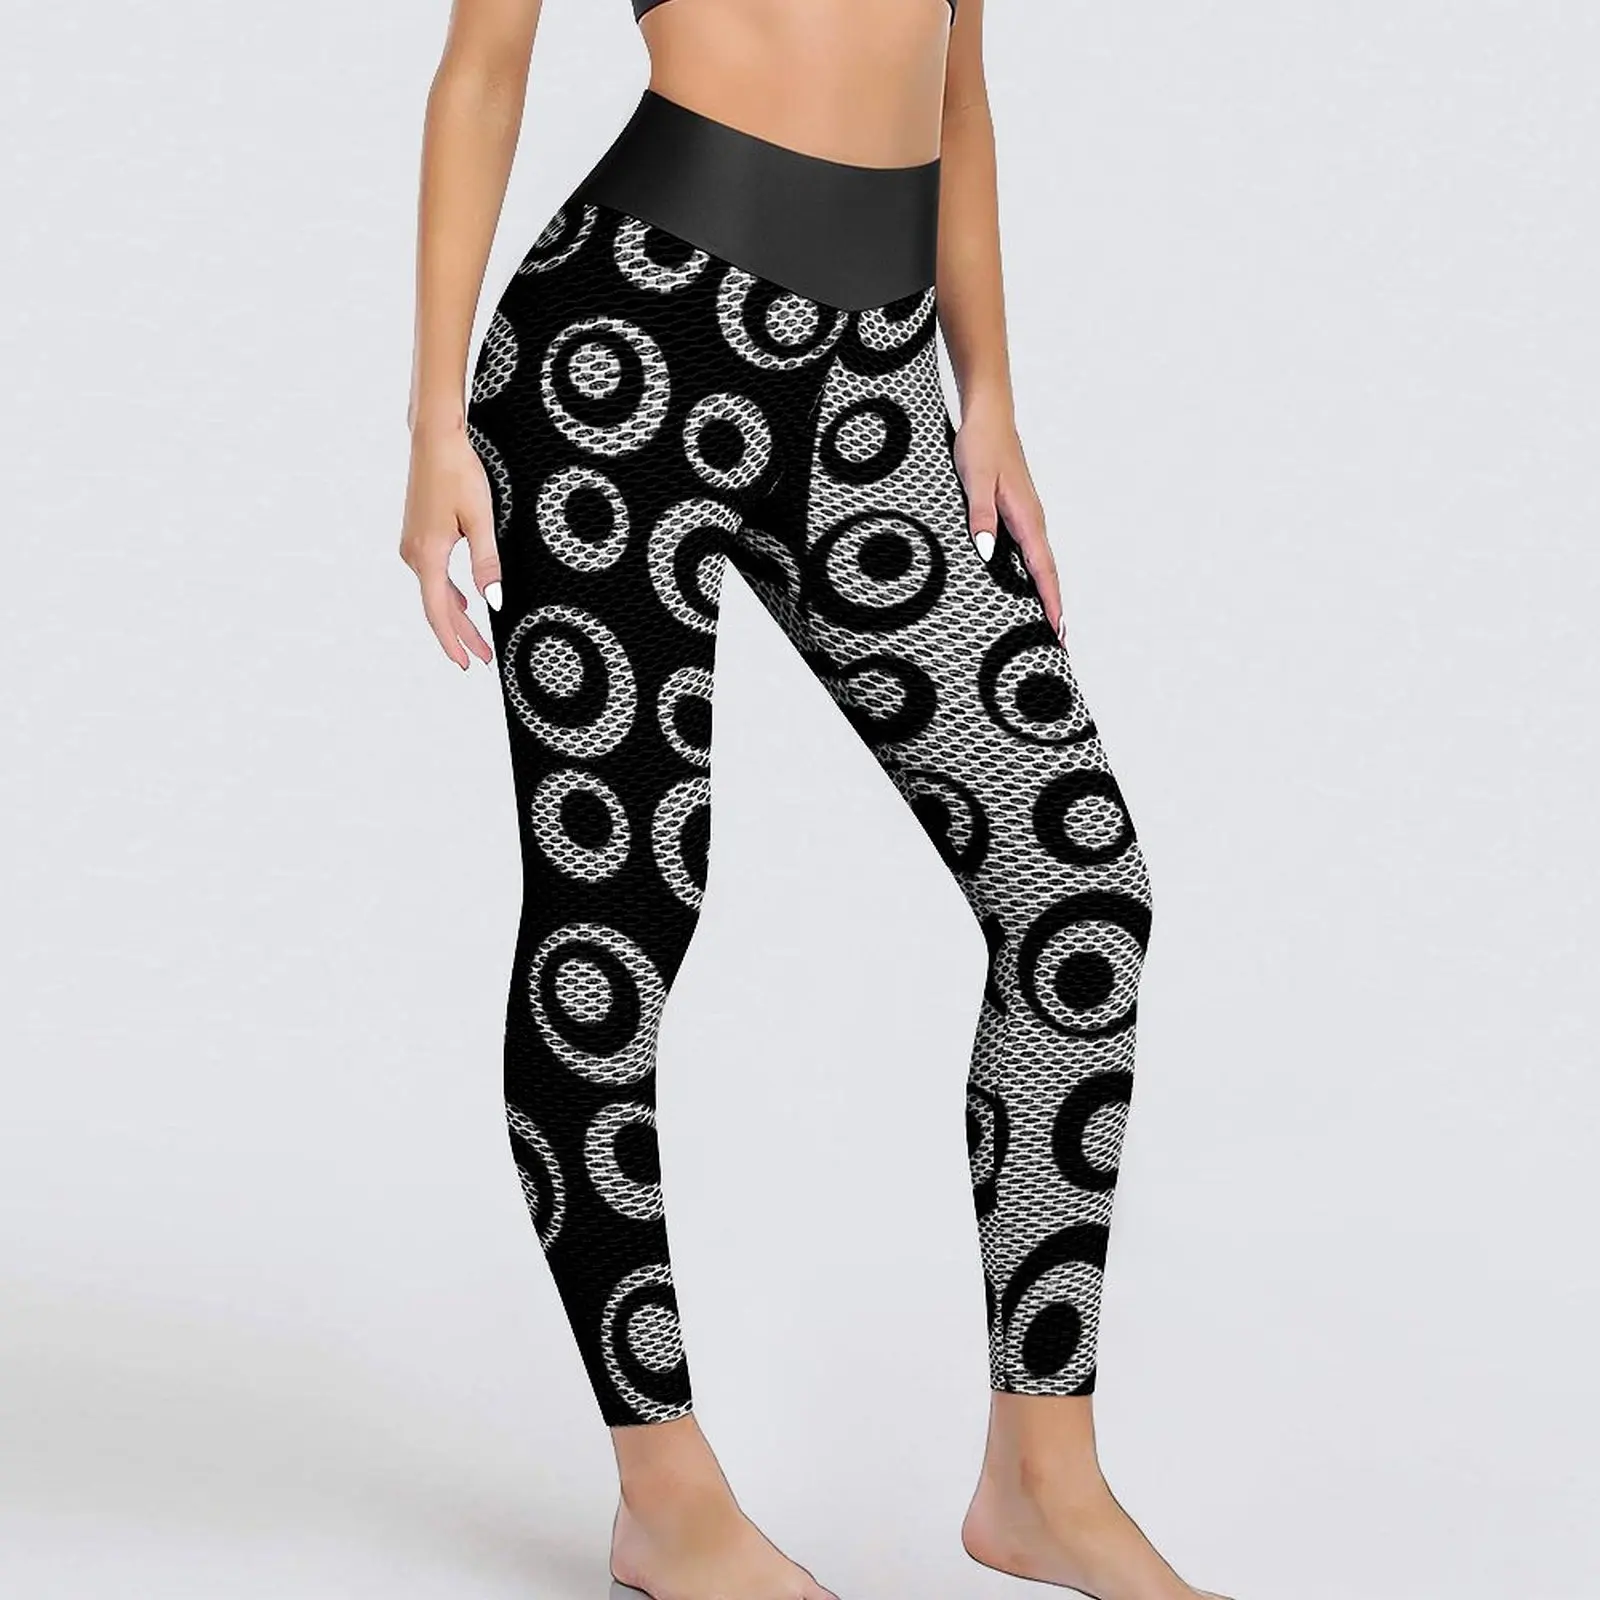 

Black And White Two Tone Leggings Sexy Mod Love Circles Dots Push Up Yoga Pants Vintage Seamless Leggins Running Sports Tights